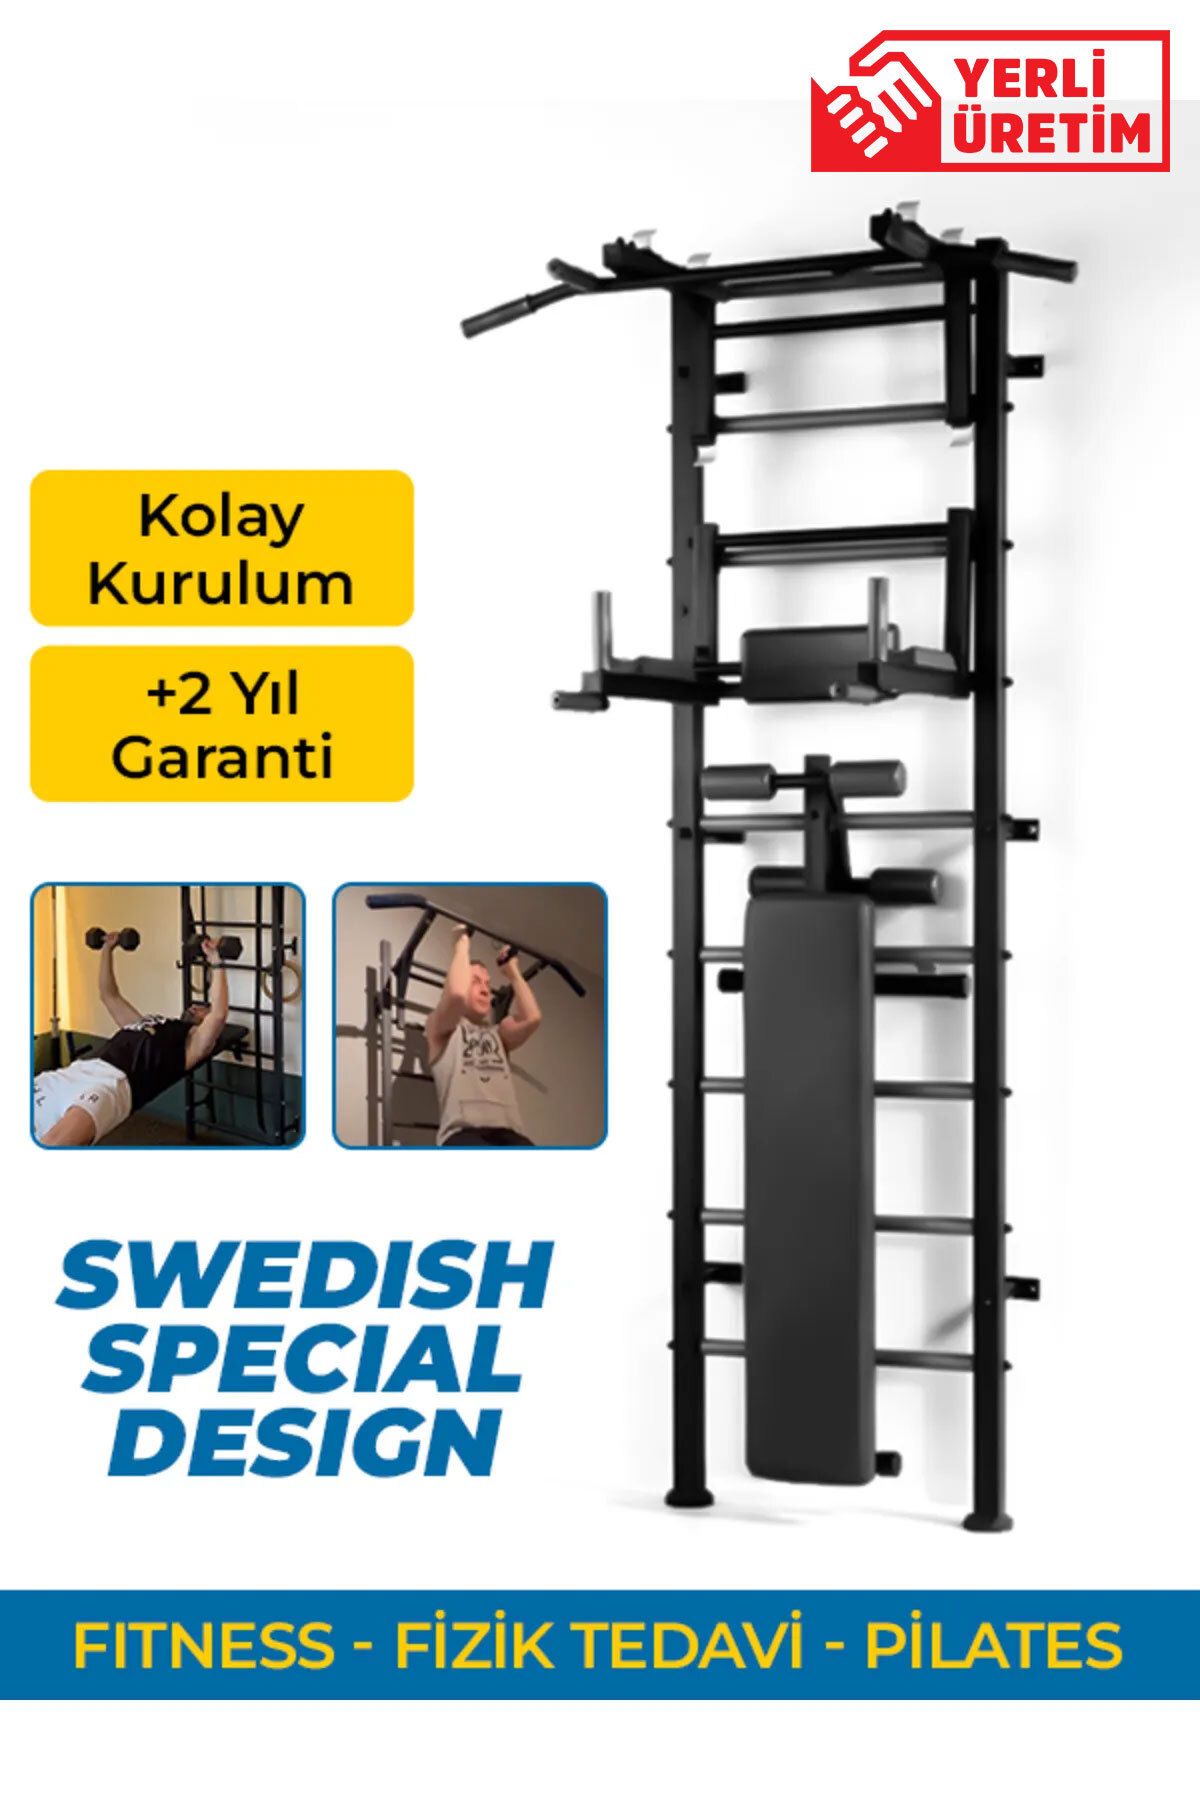 Duruh İsveç Duvarı - Swedish Wall Fitness - Fizik Tedavi - Pilates Aleti